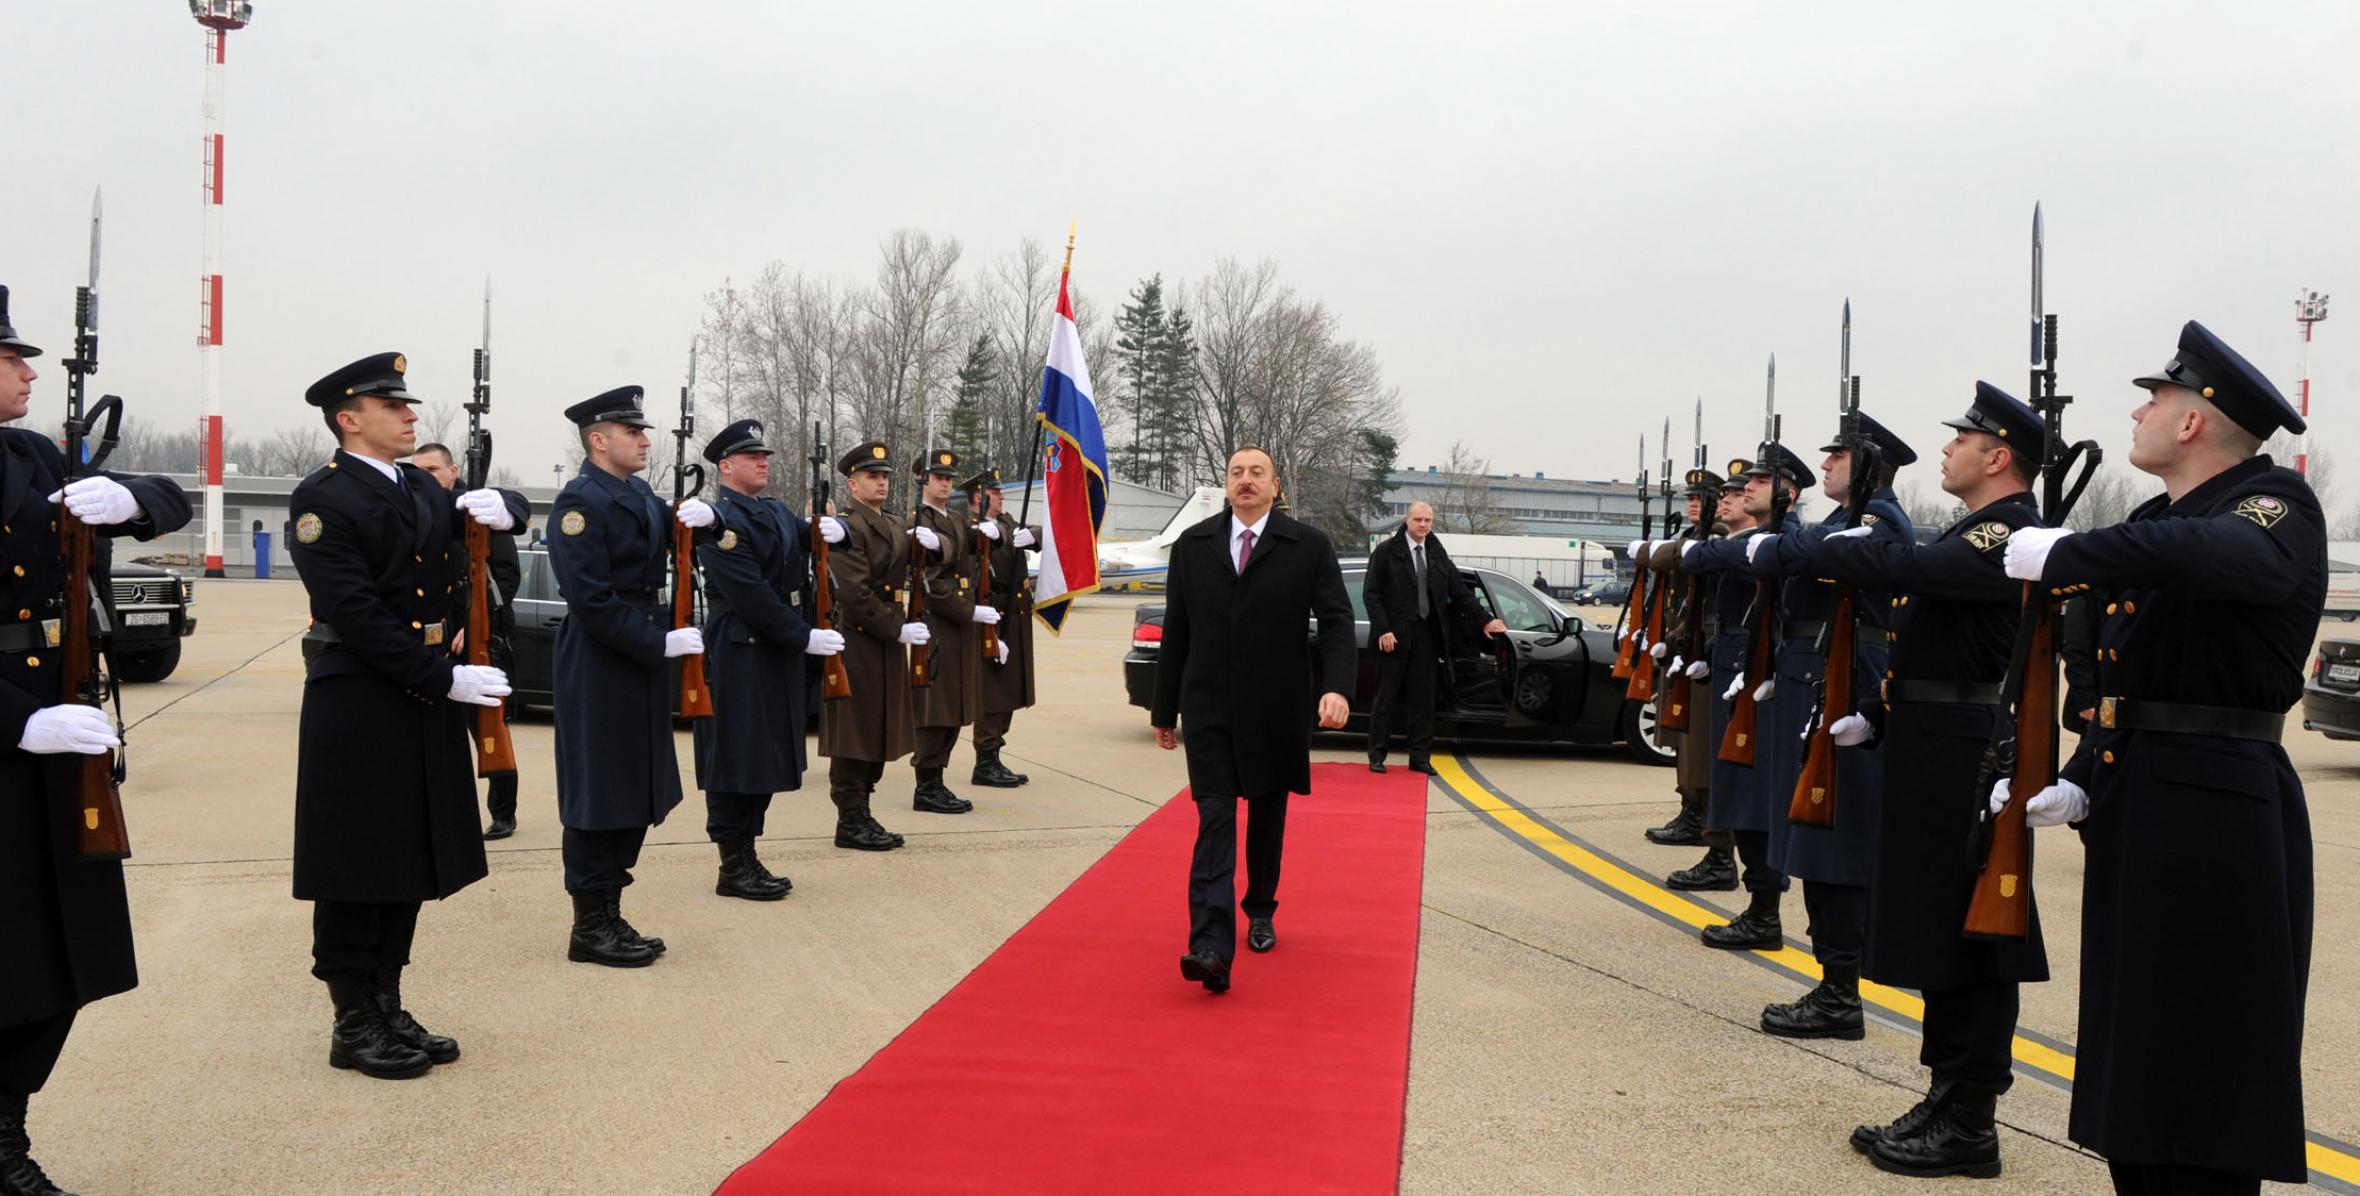 Ilham Aliyev’s visit to Croatia ended